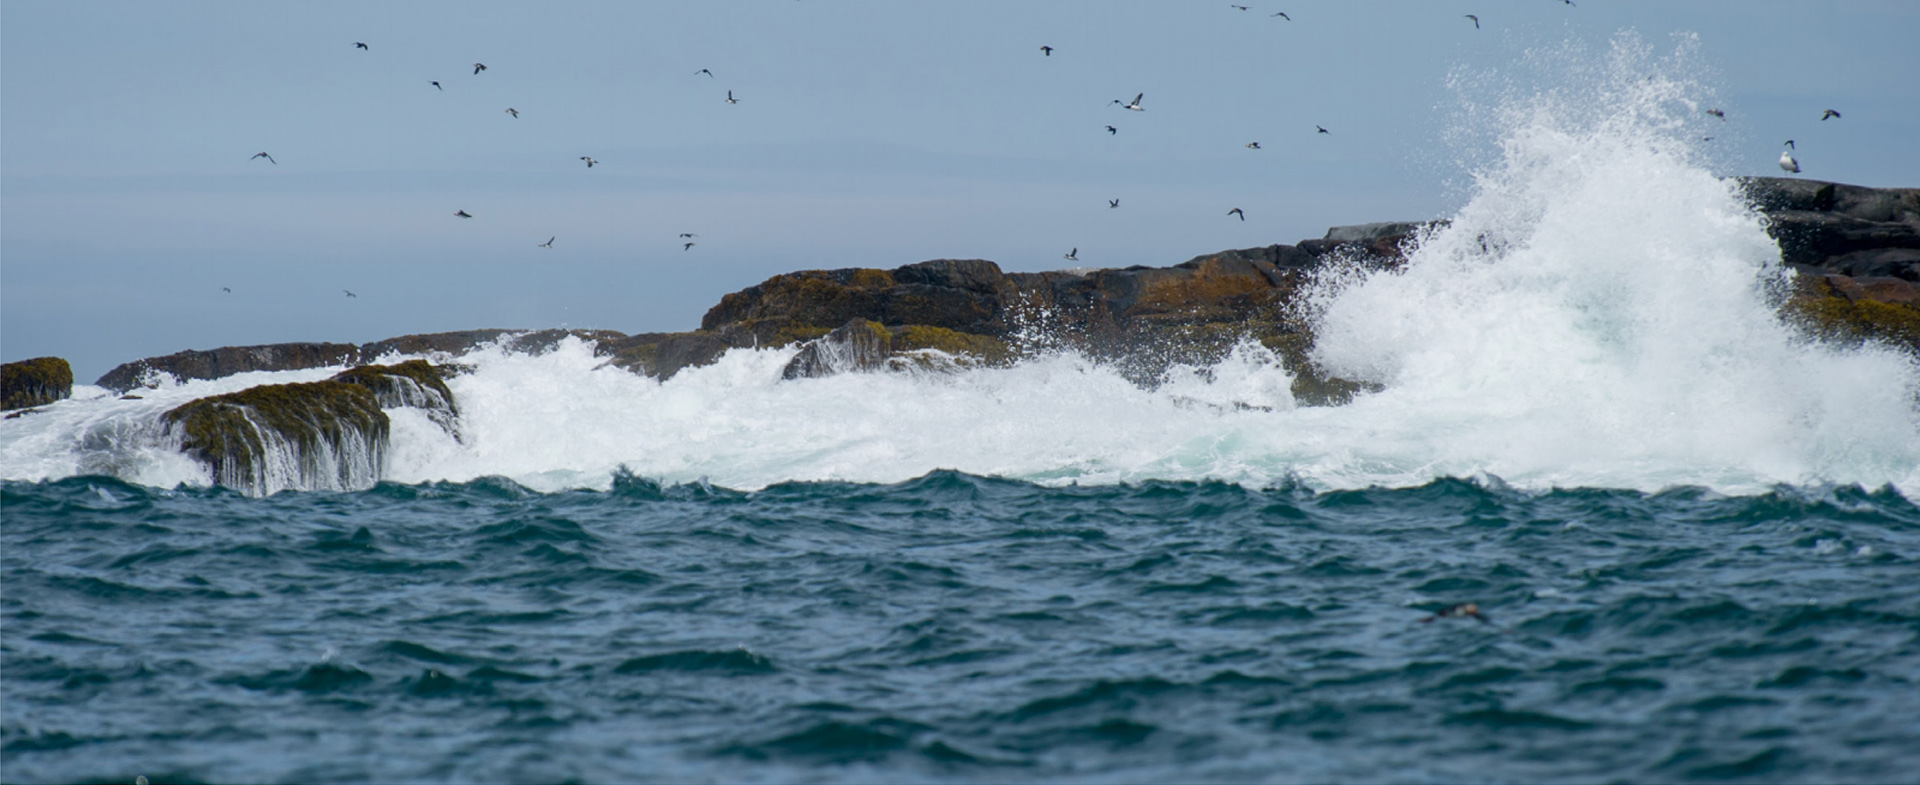 Waves splashing on Maine's rocky coast